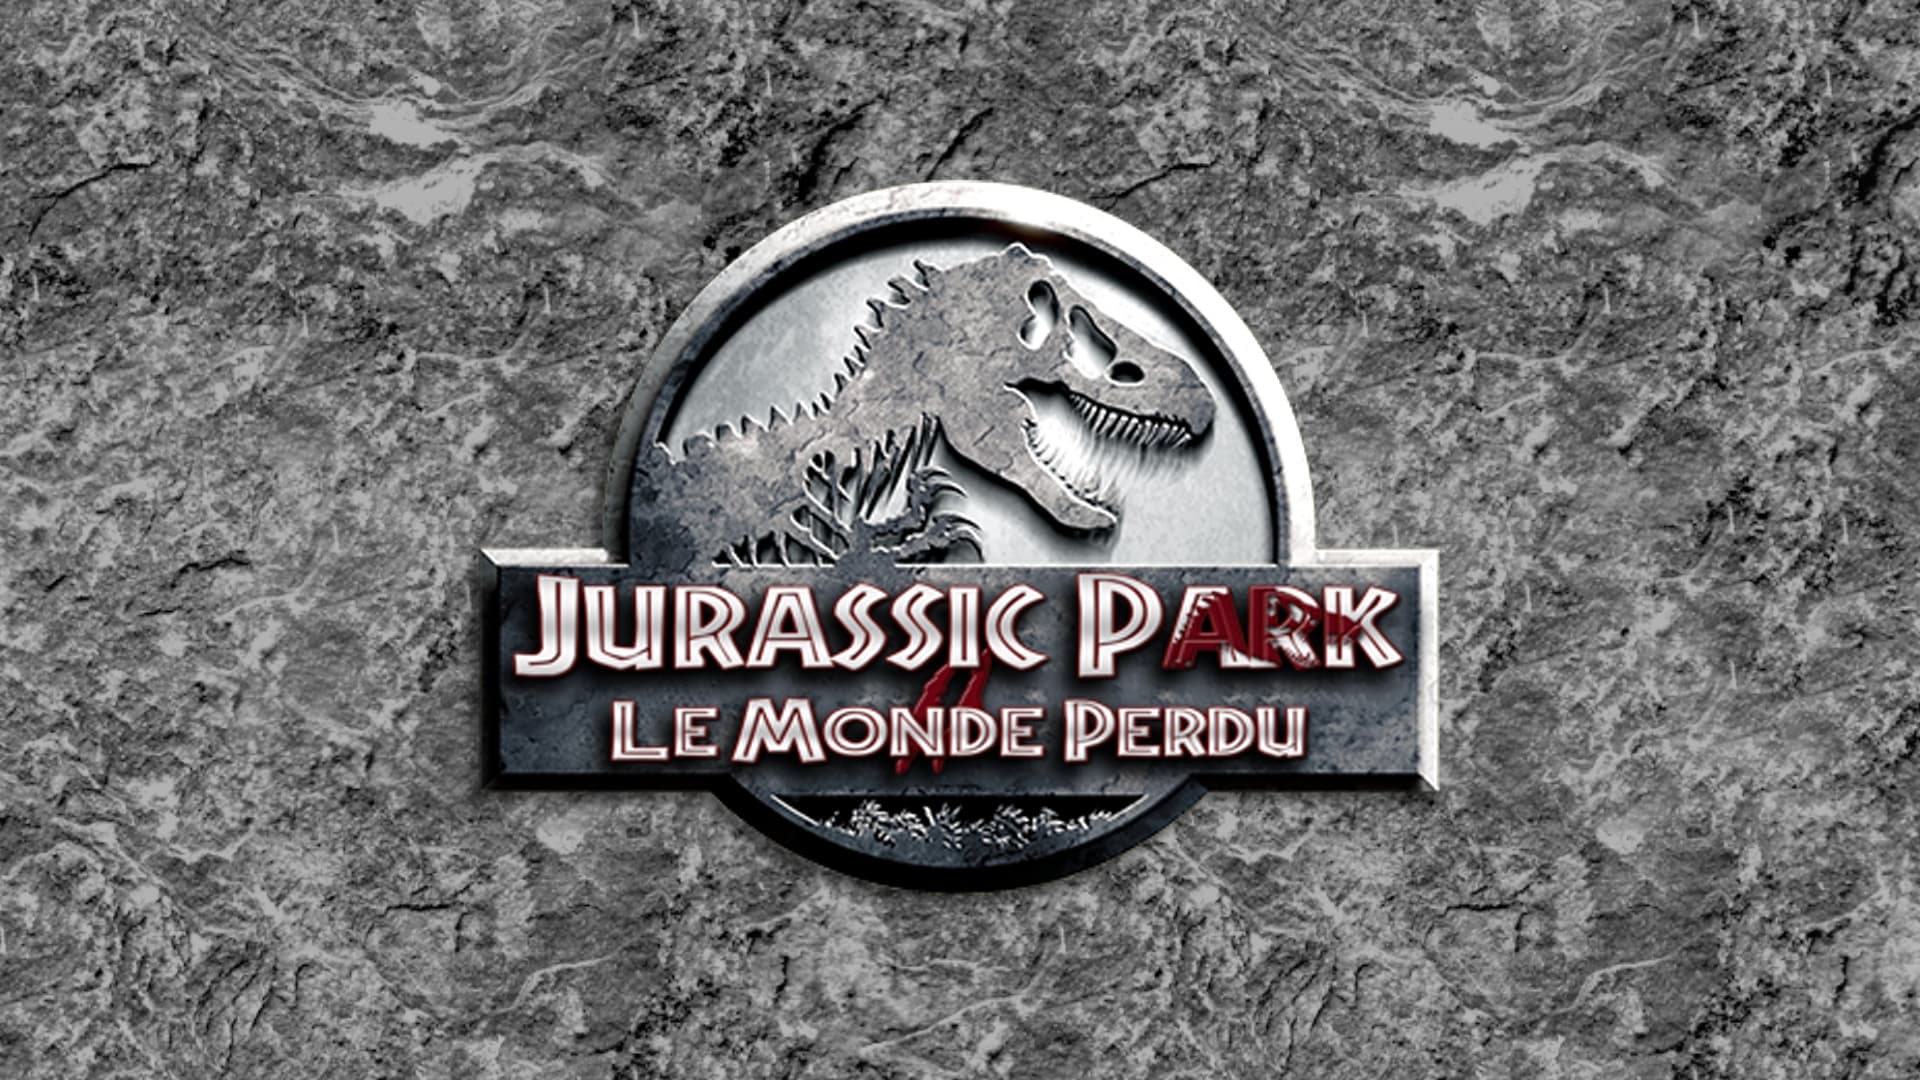 Image du film Le Monde perdu : Jurassic Park u14idxdhgdsr6h3du85uybfhskfjpg